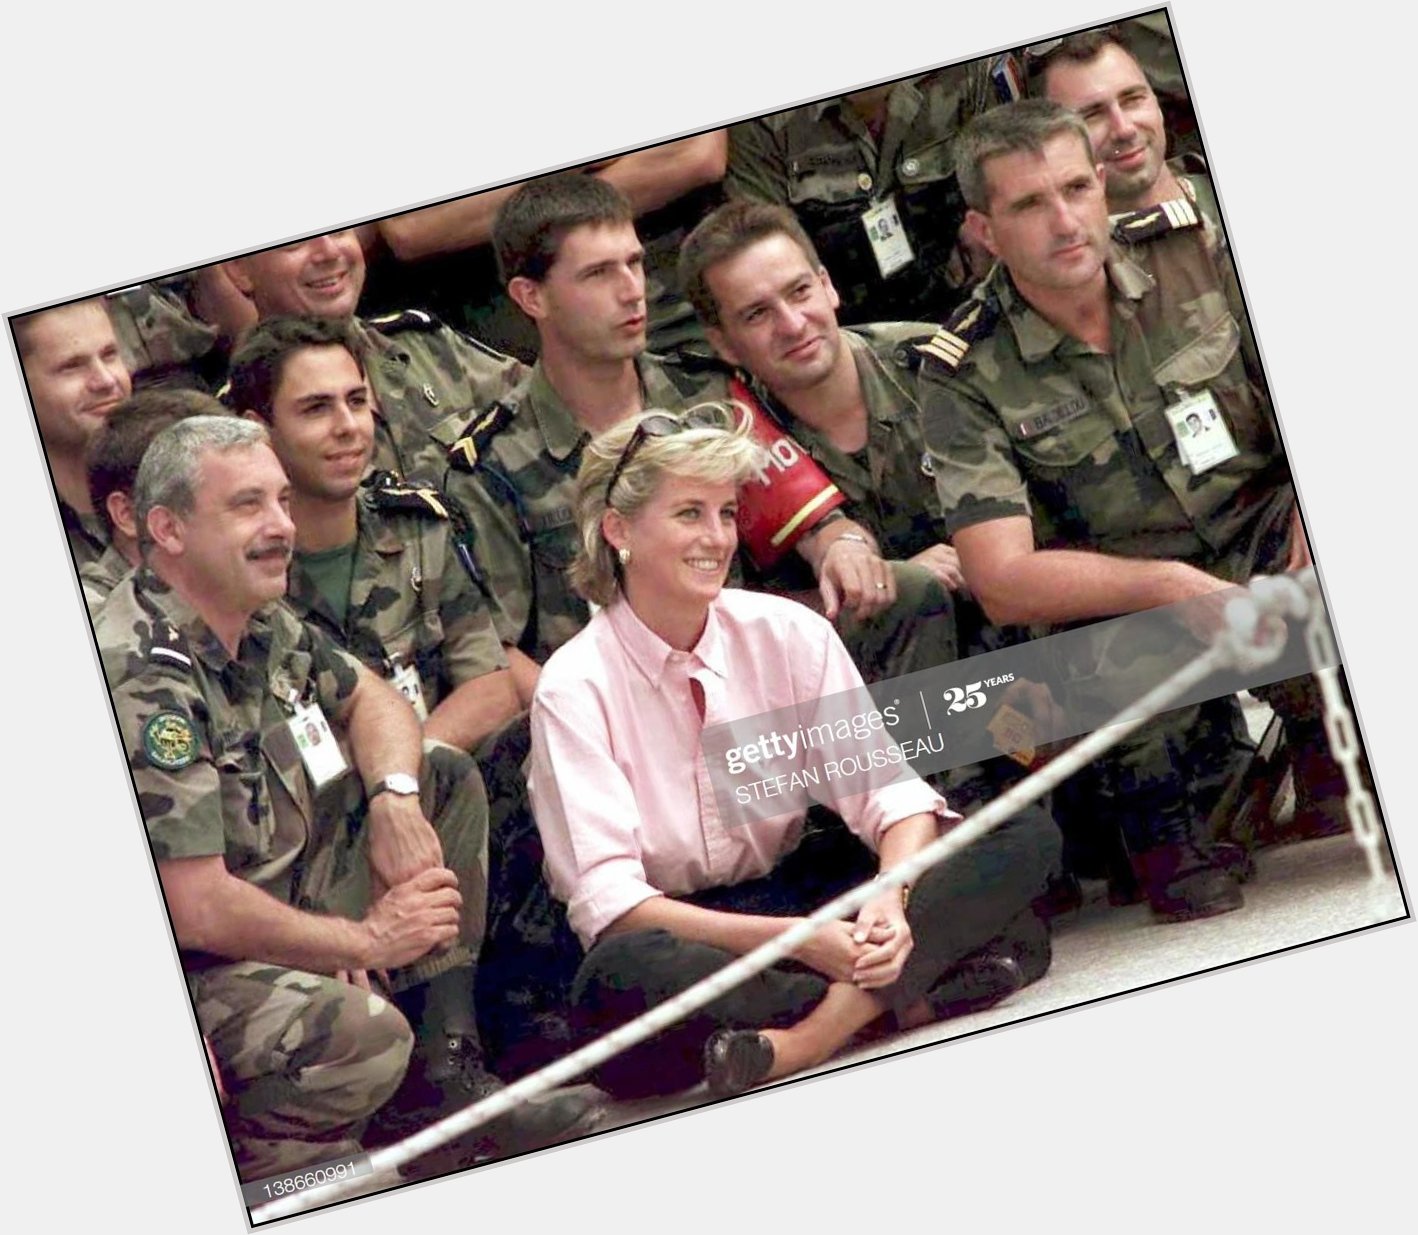 Happy birthday to Princess Diana. We still miss you! 